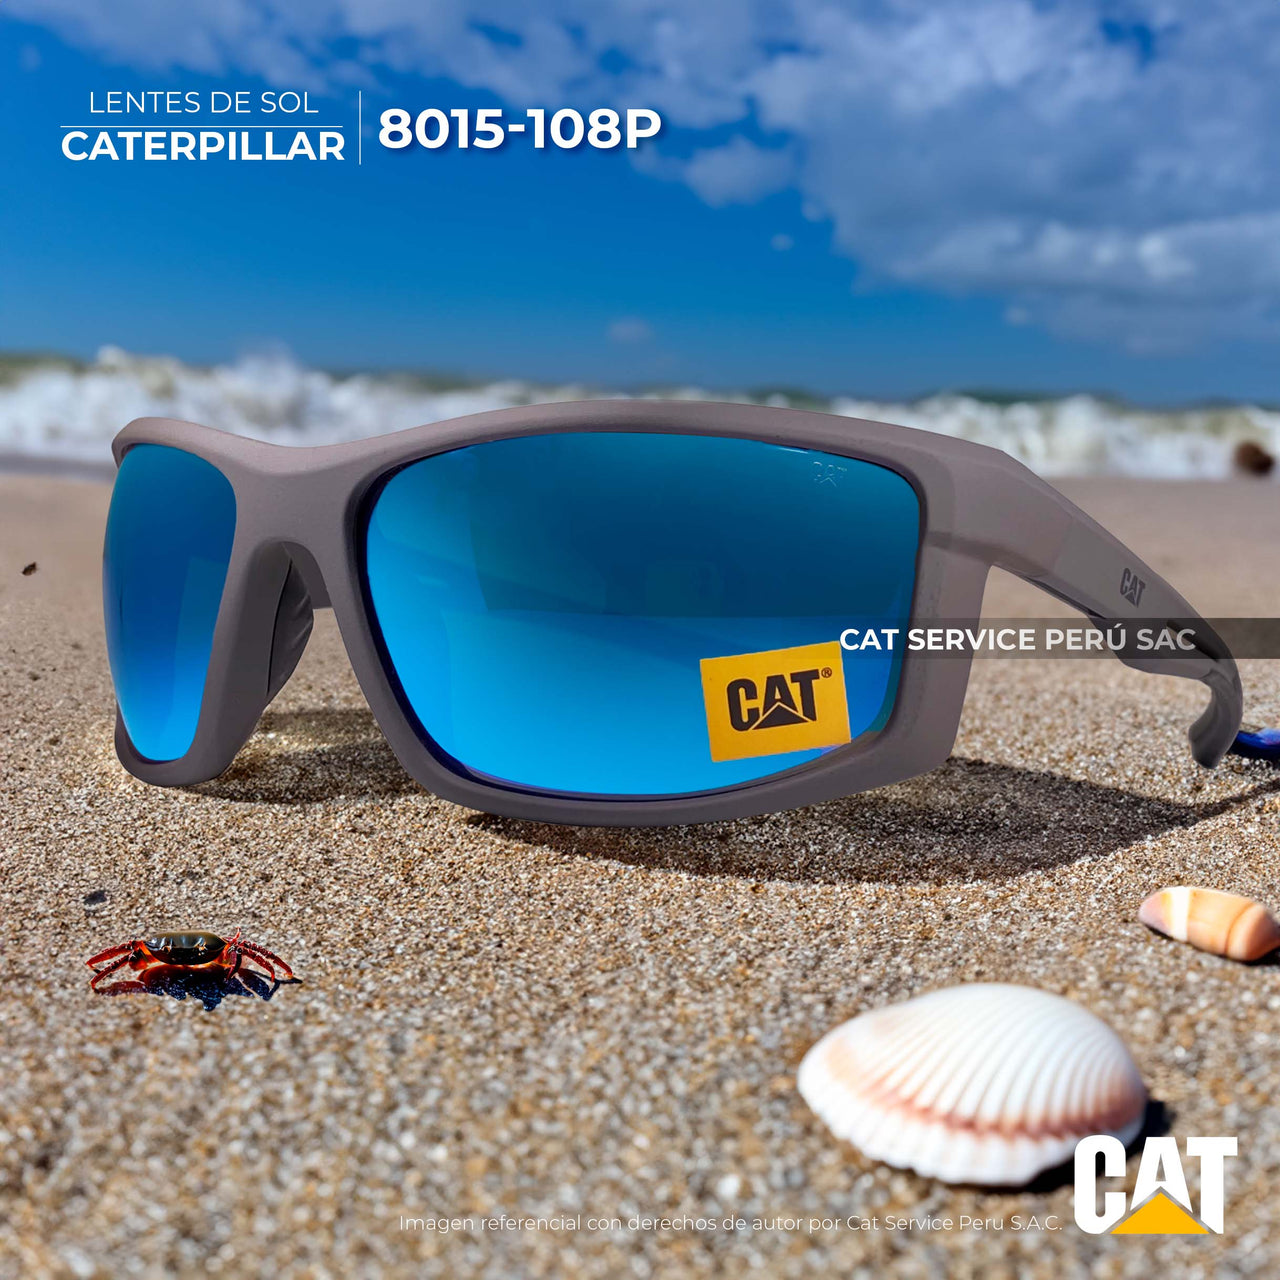 Cat CPS-8015-108P Polarized Blue Moons Sunglasses 